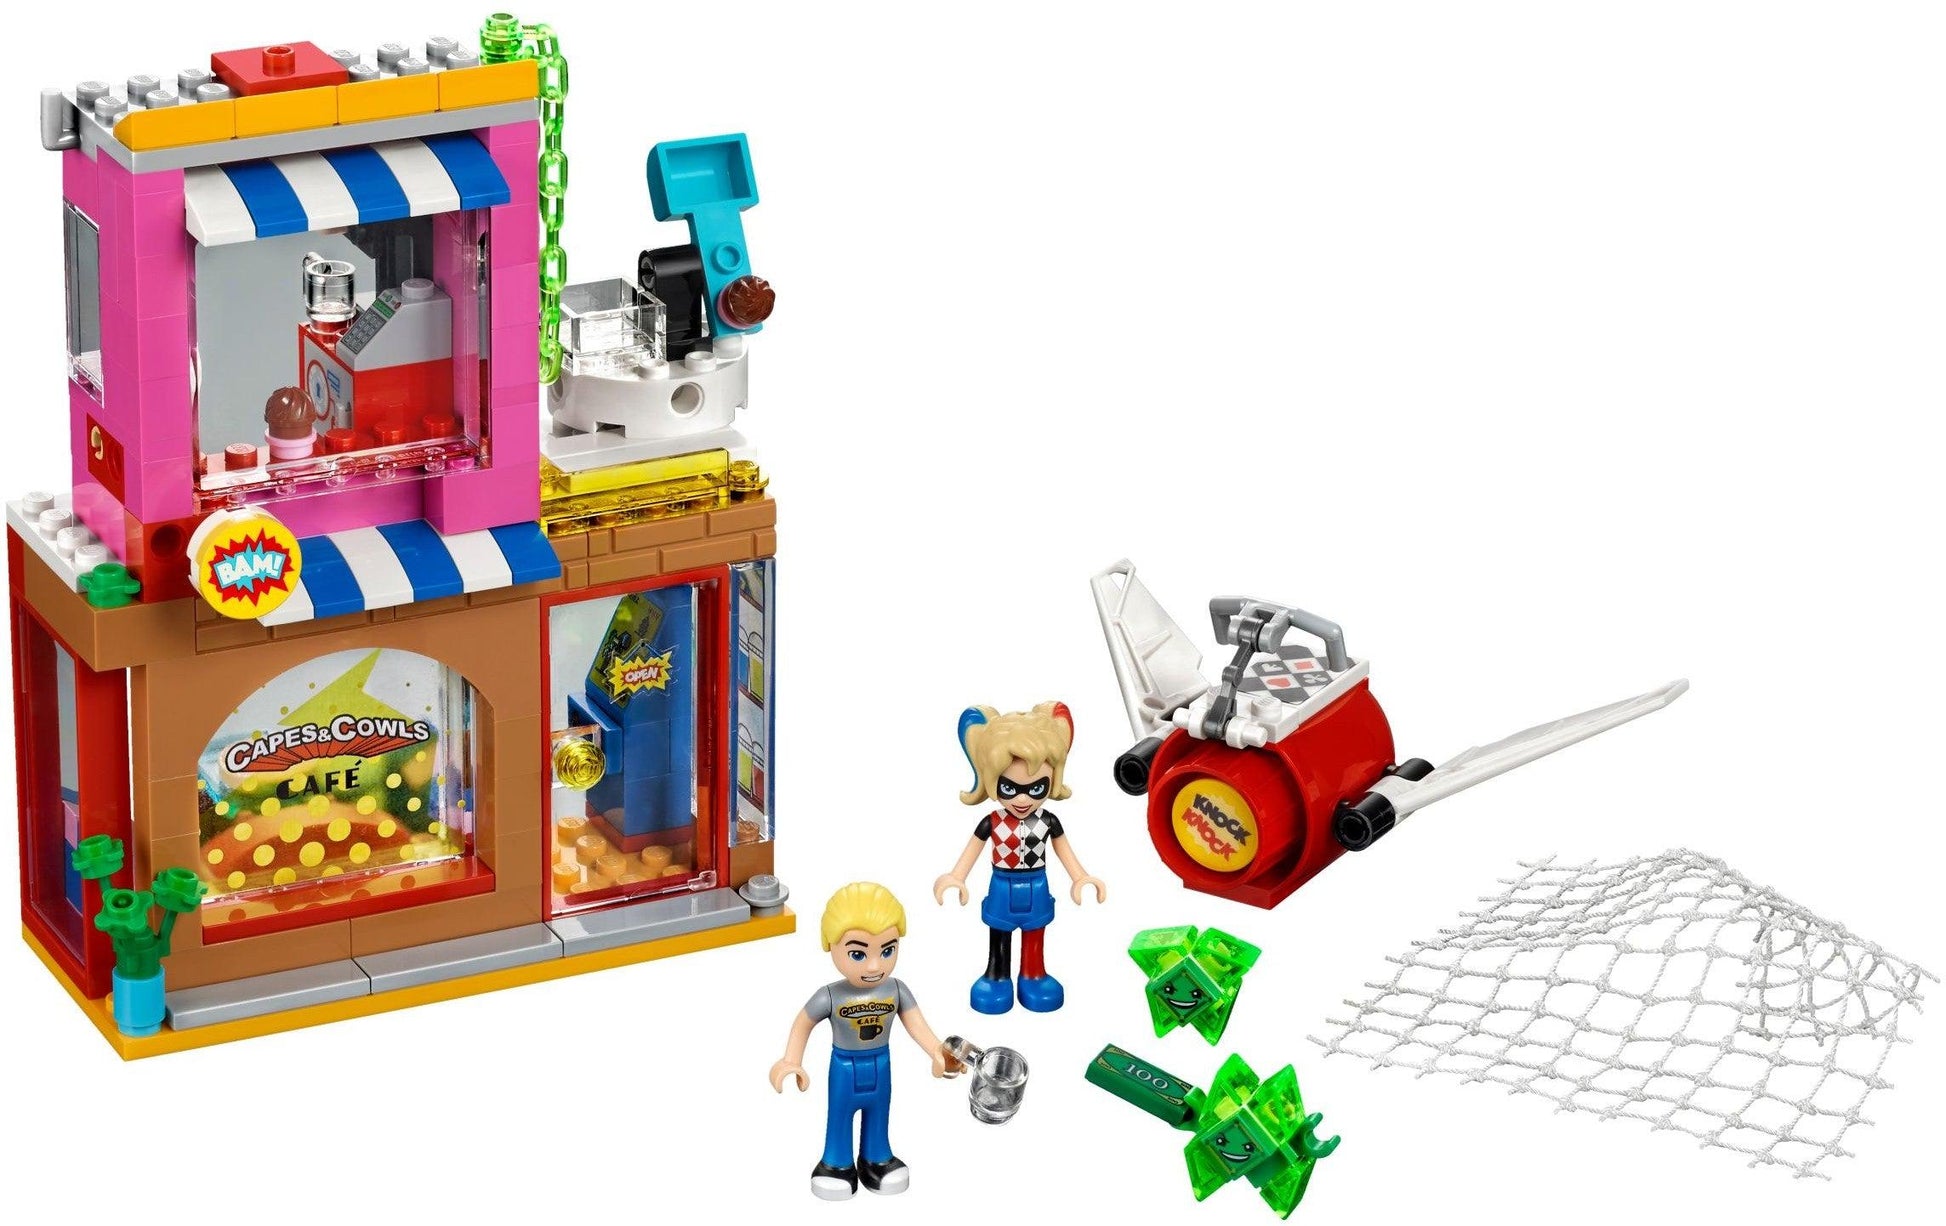 LEGO Harley Quinn schiet te hulp 41231 Superheroes Girls LEGO SUPERHEROES @ 2TTOYS LEGO €. 29.49